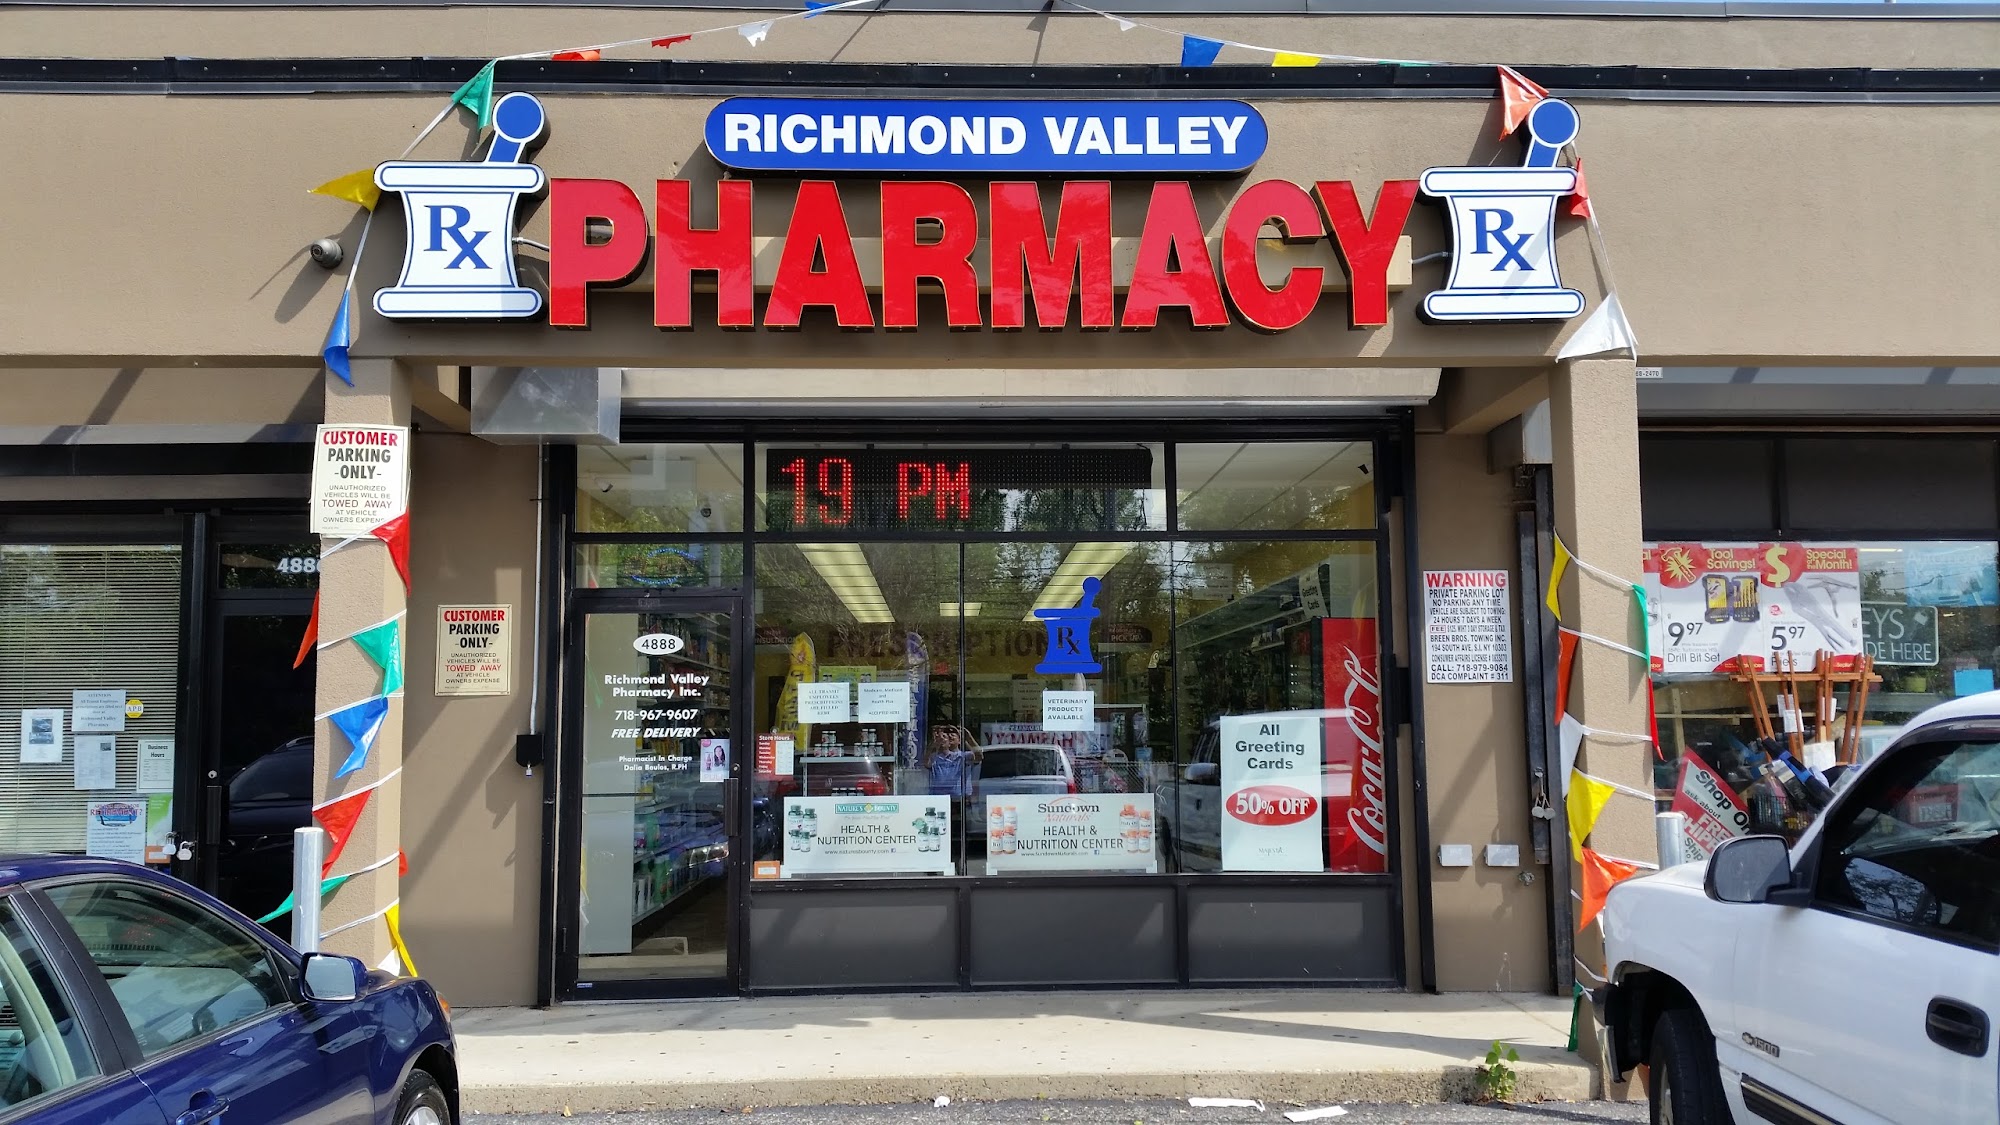 Richmond Valley Pharmacy